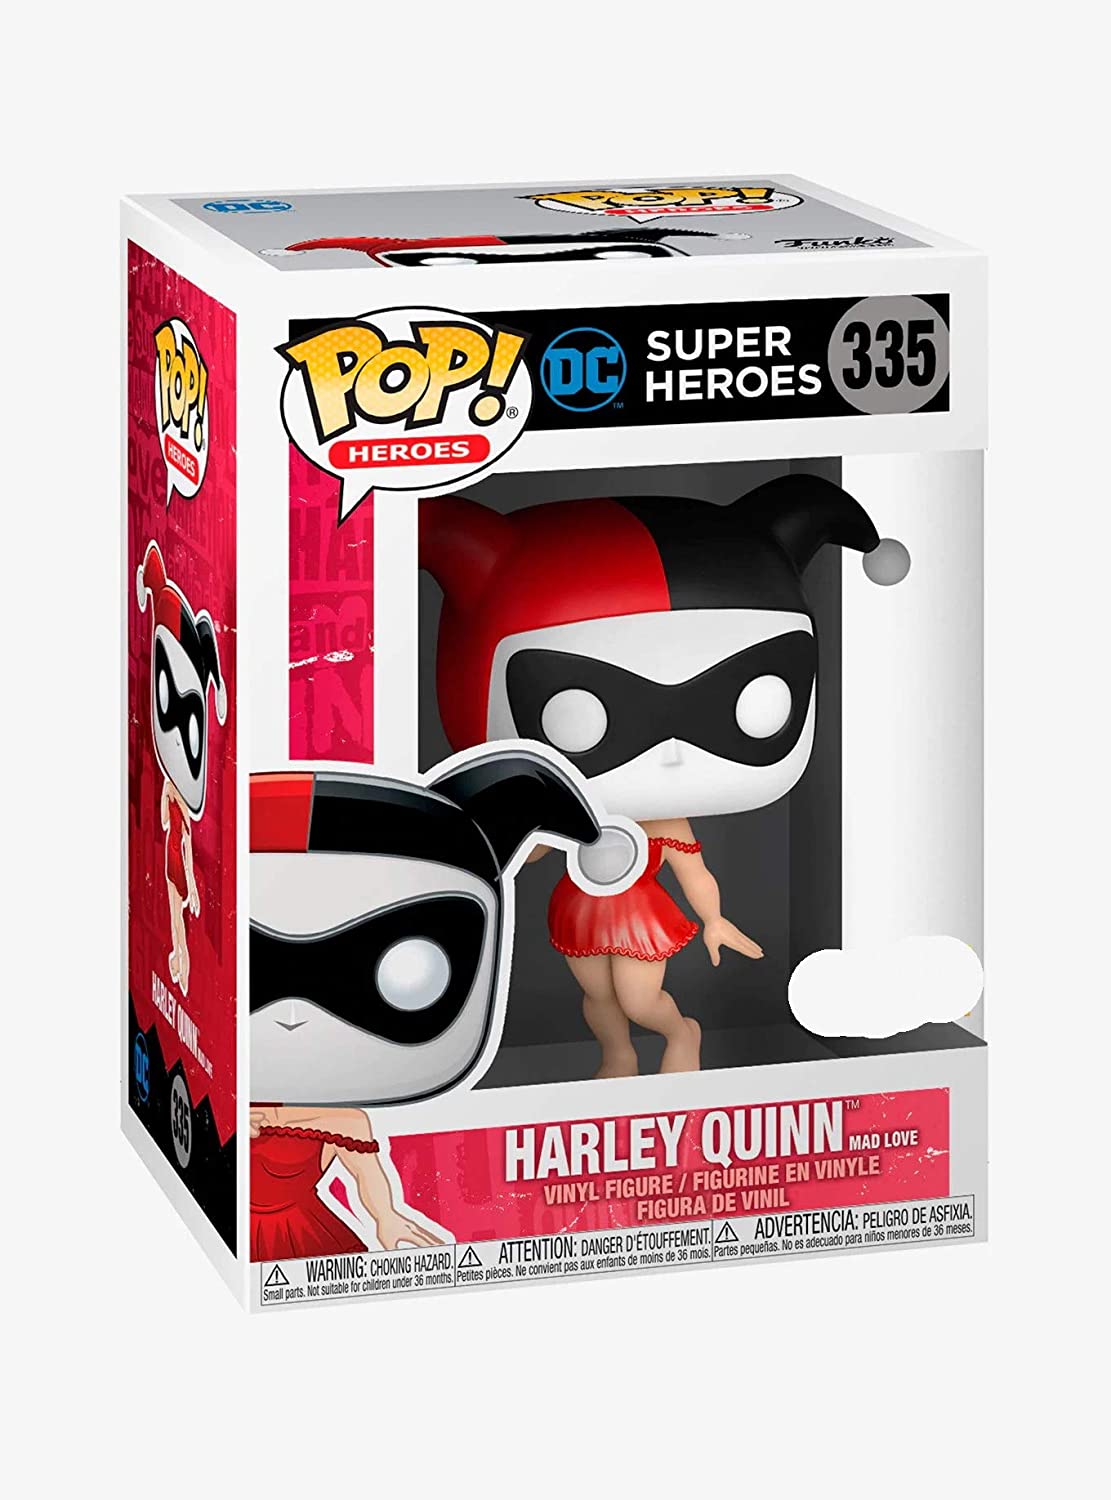 Funko POP! Heroes: DC Super Heroes - Harley Quinn [Mad Love] H.T. Exclusive